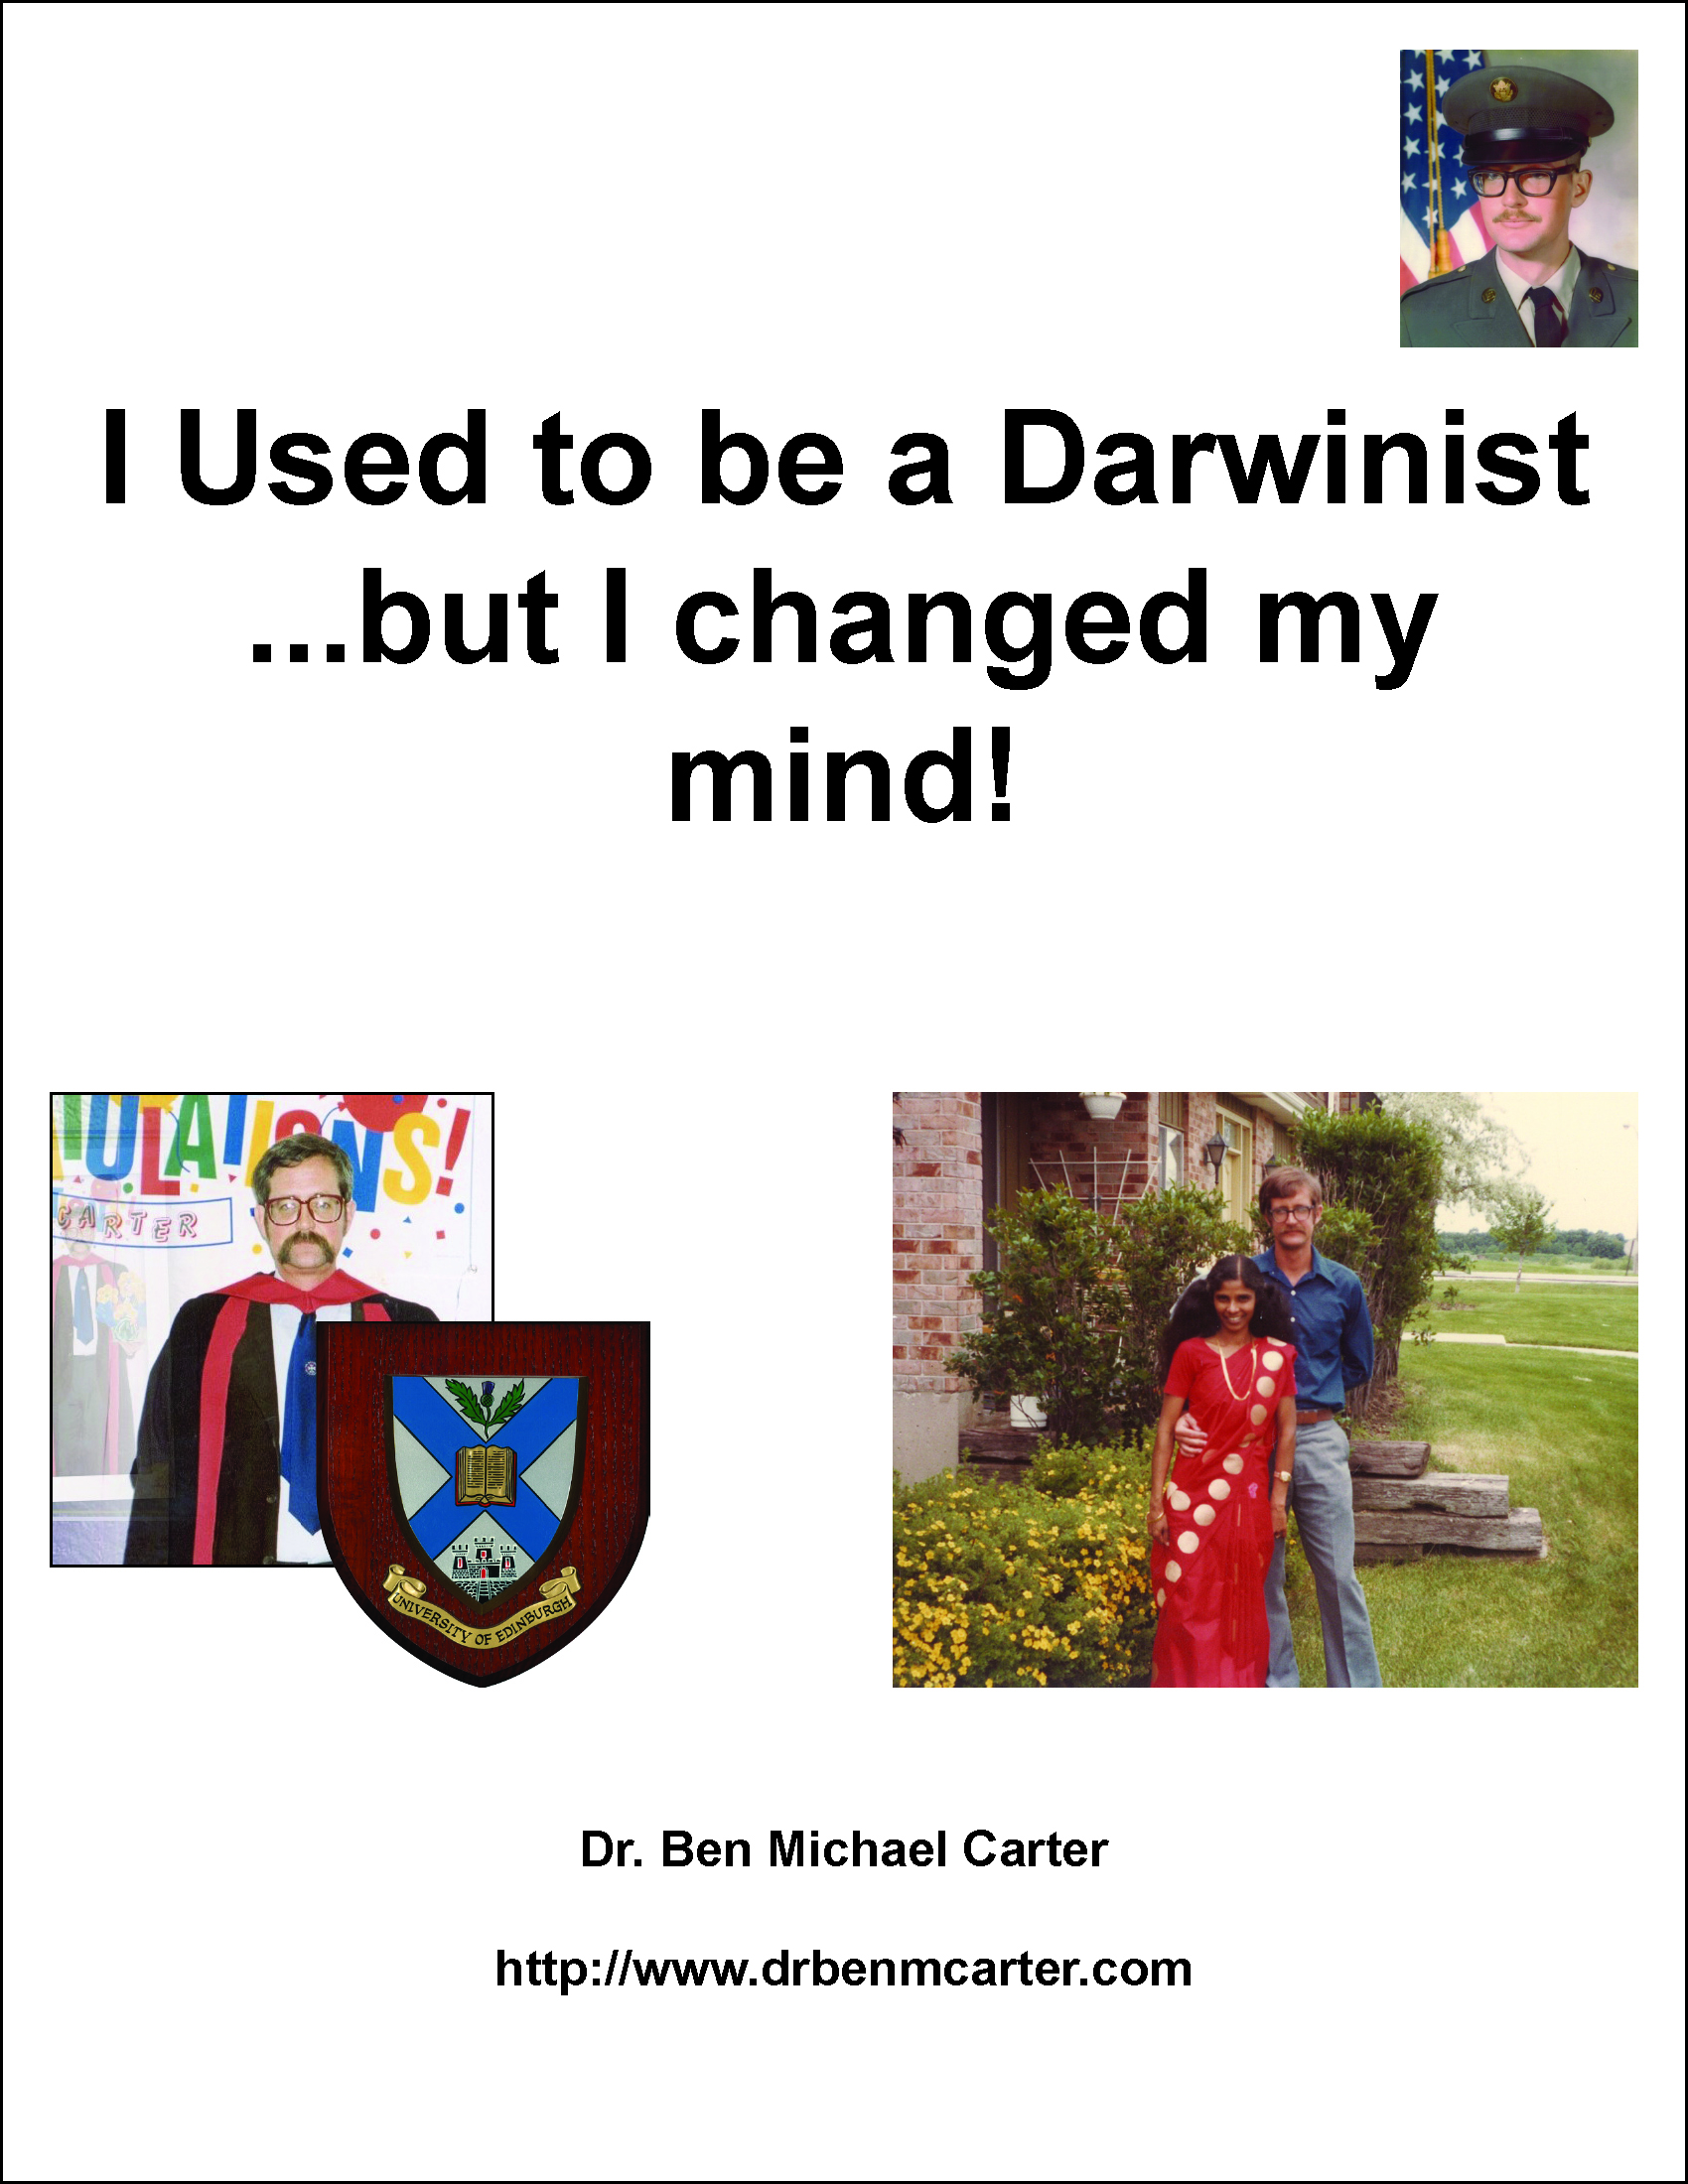 I was a Darwinist